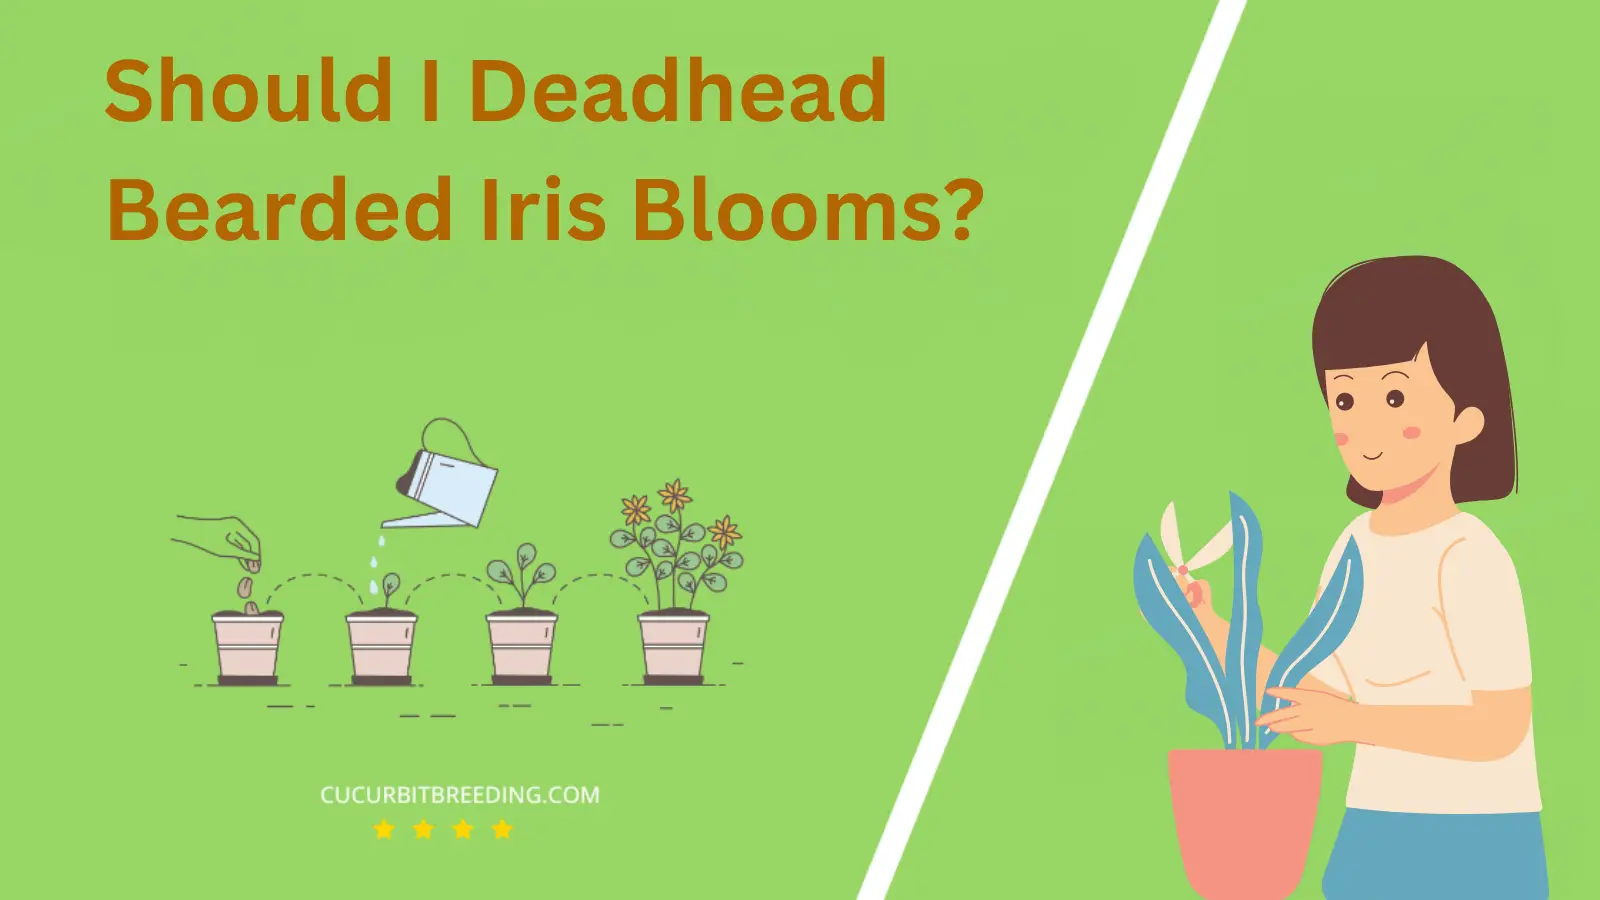 Should I Deadhead Bearded Iris Blooms?